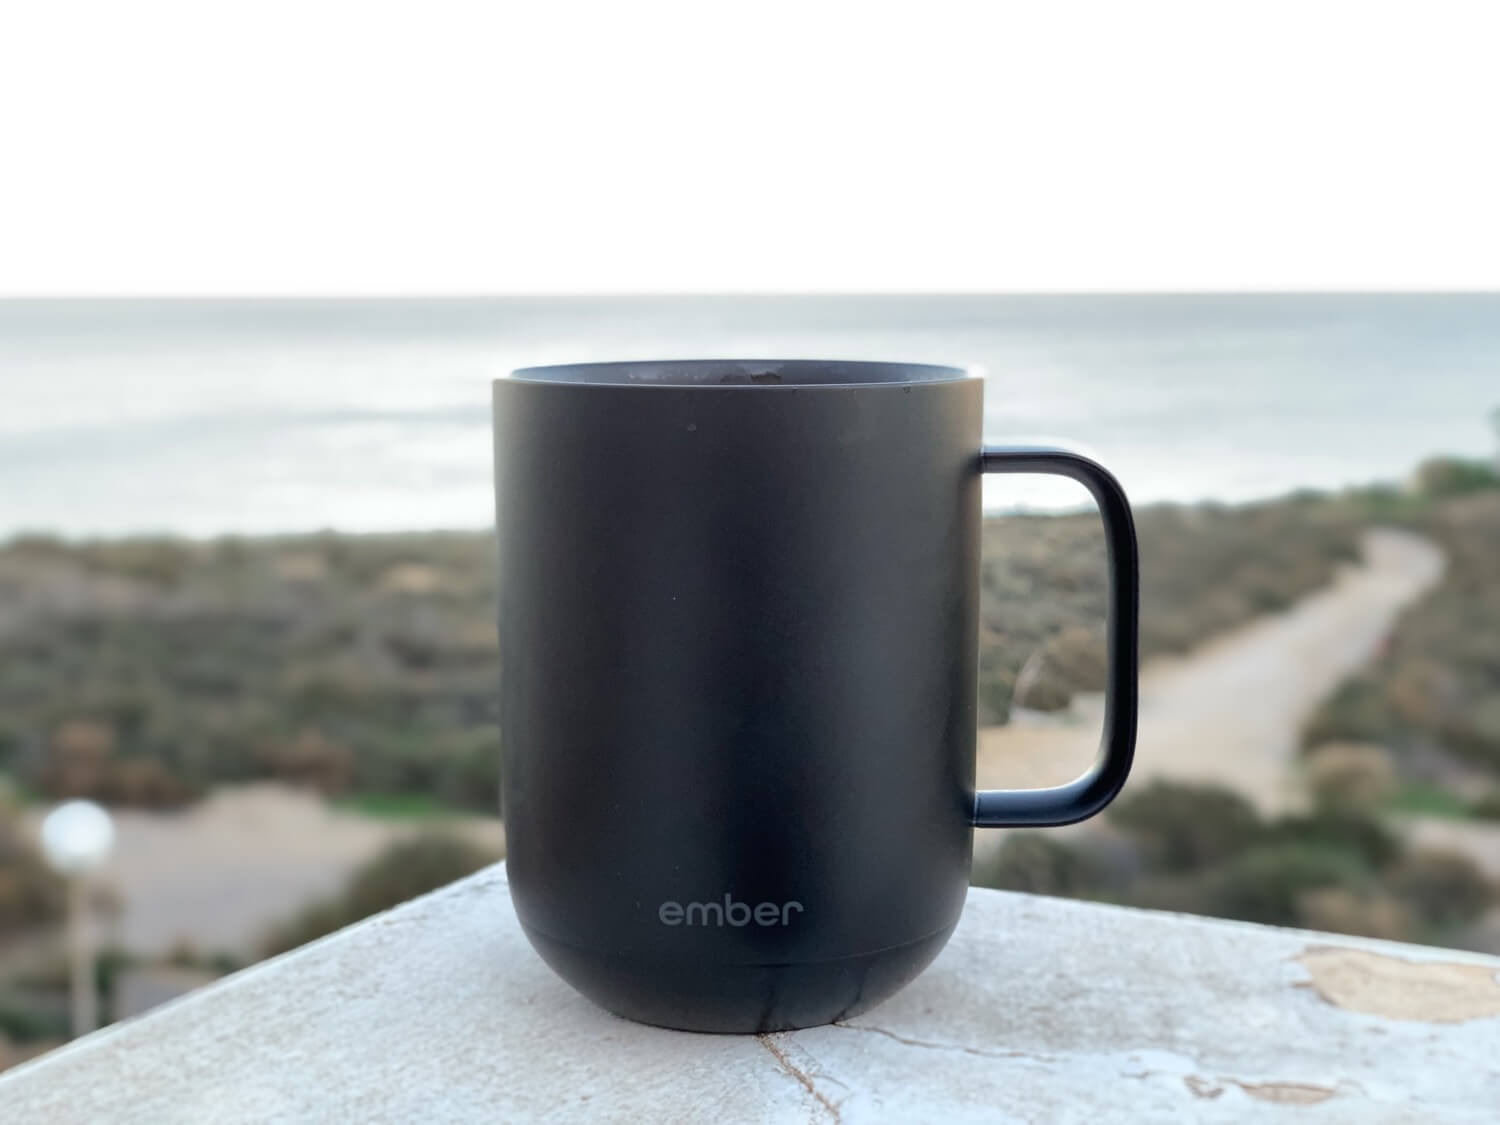 How I’m keeping my coffee ☕️ warm using the Ember mug